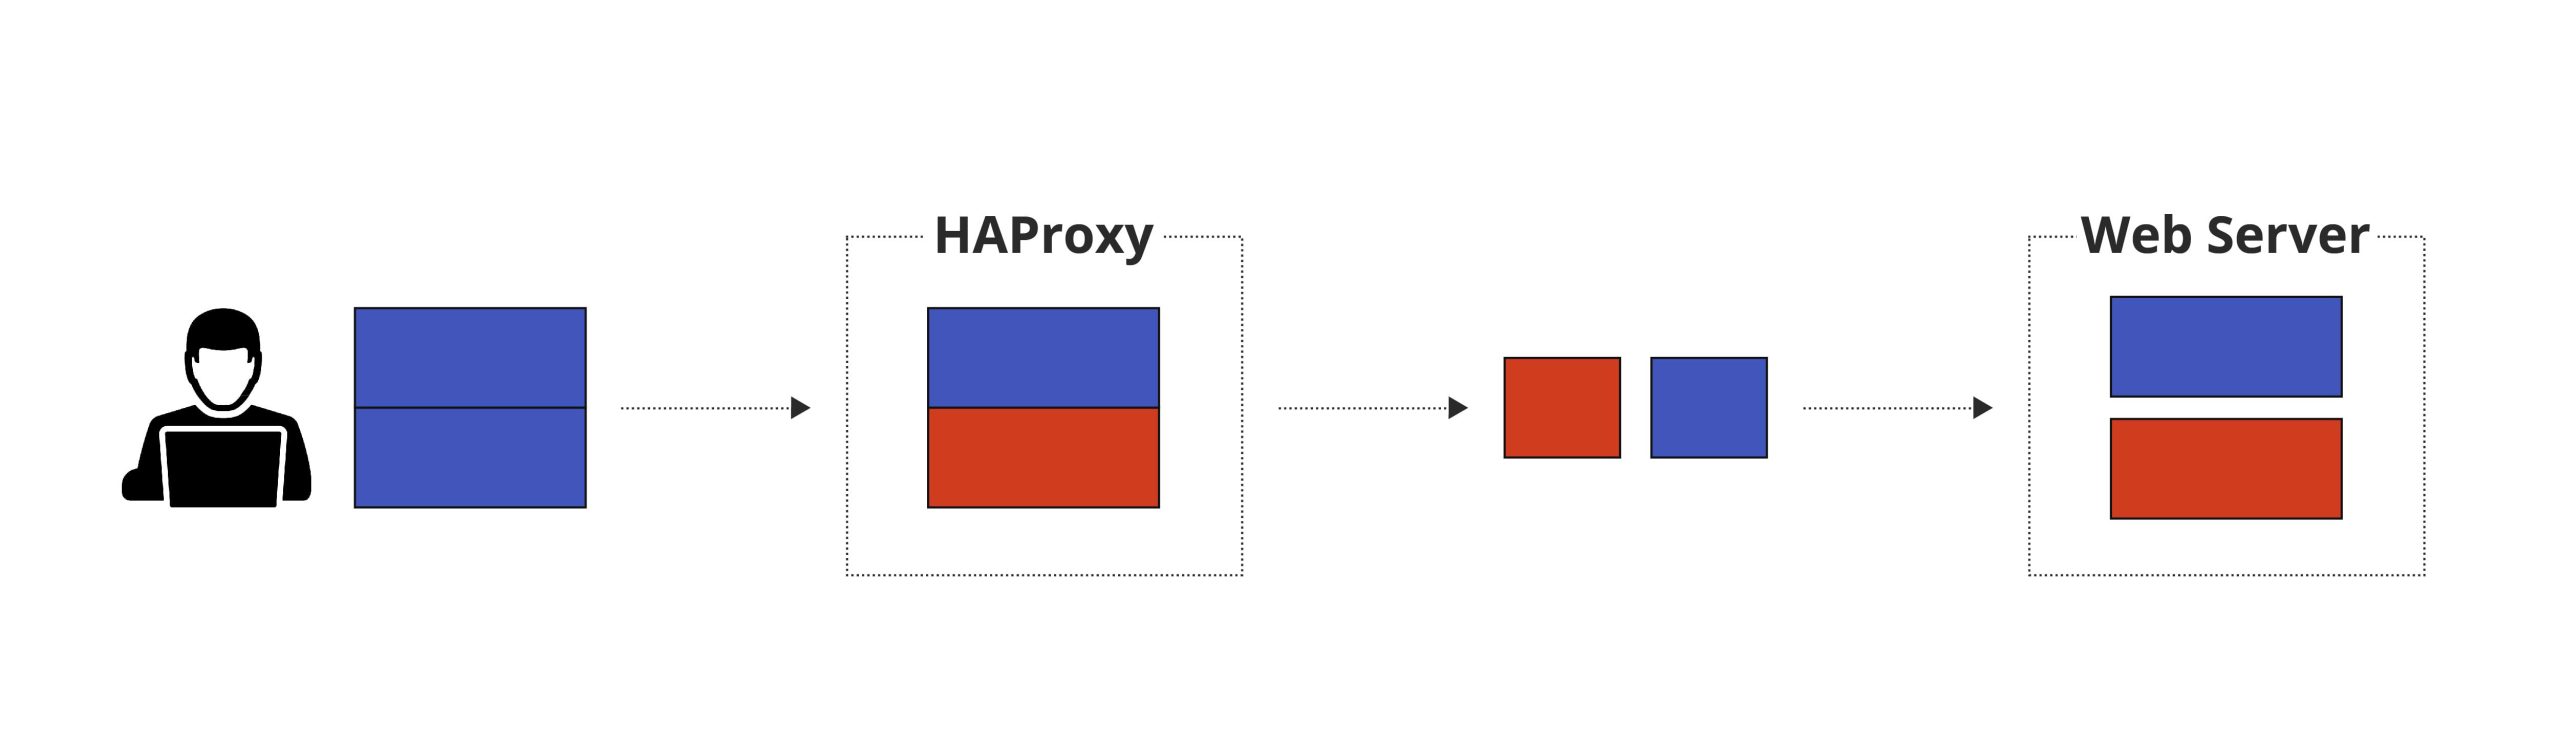 Ubuntu 6294-1: HAProxy vulnerability